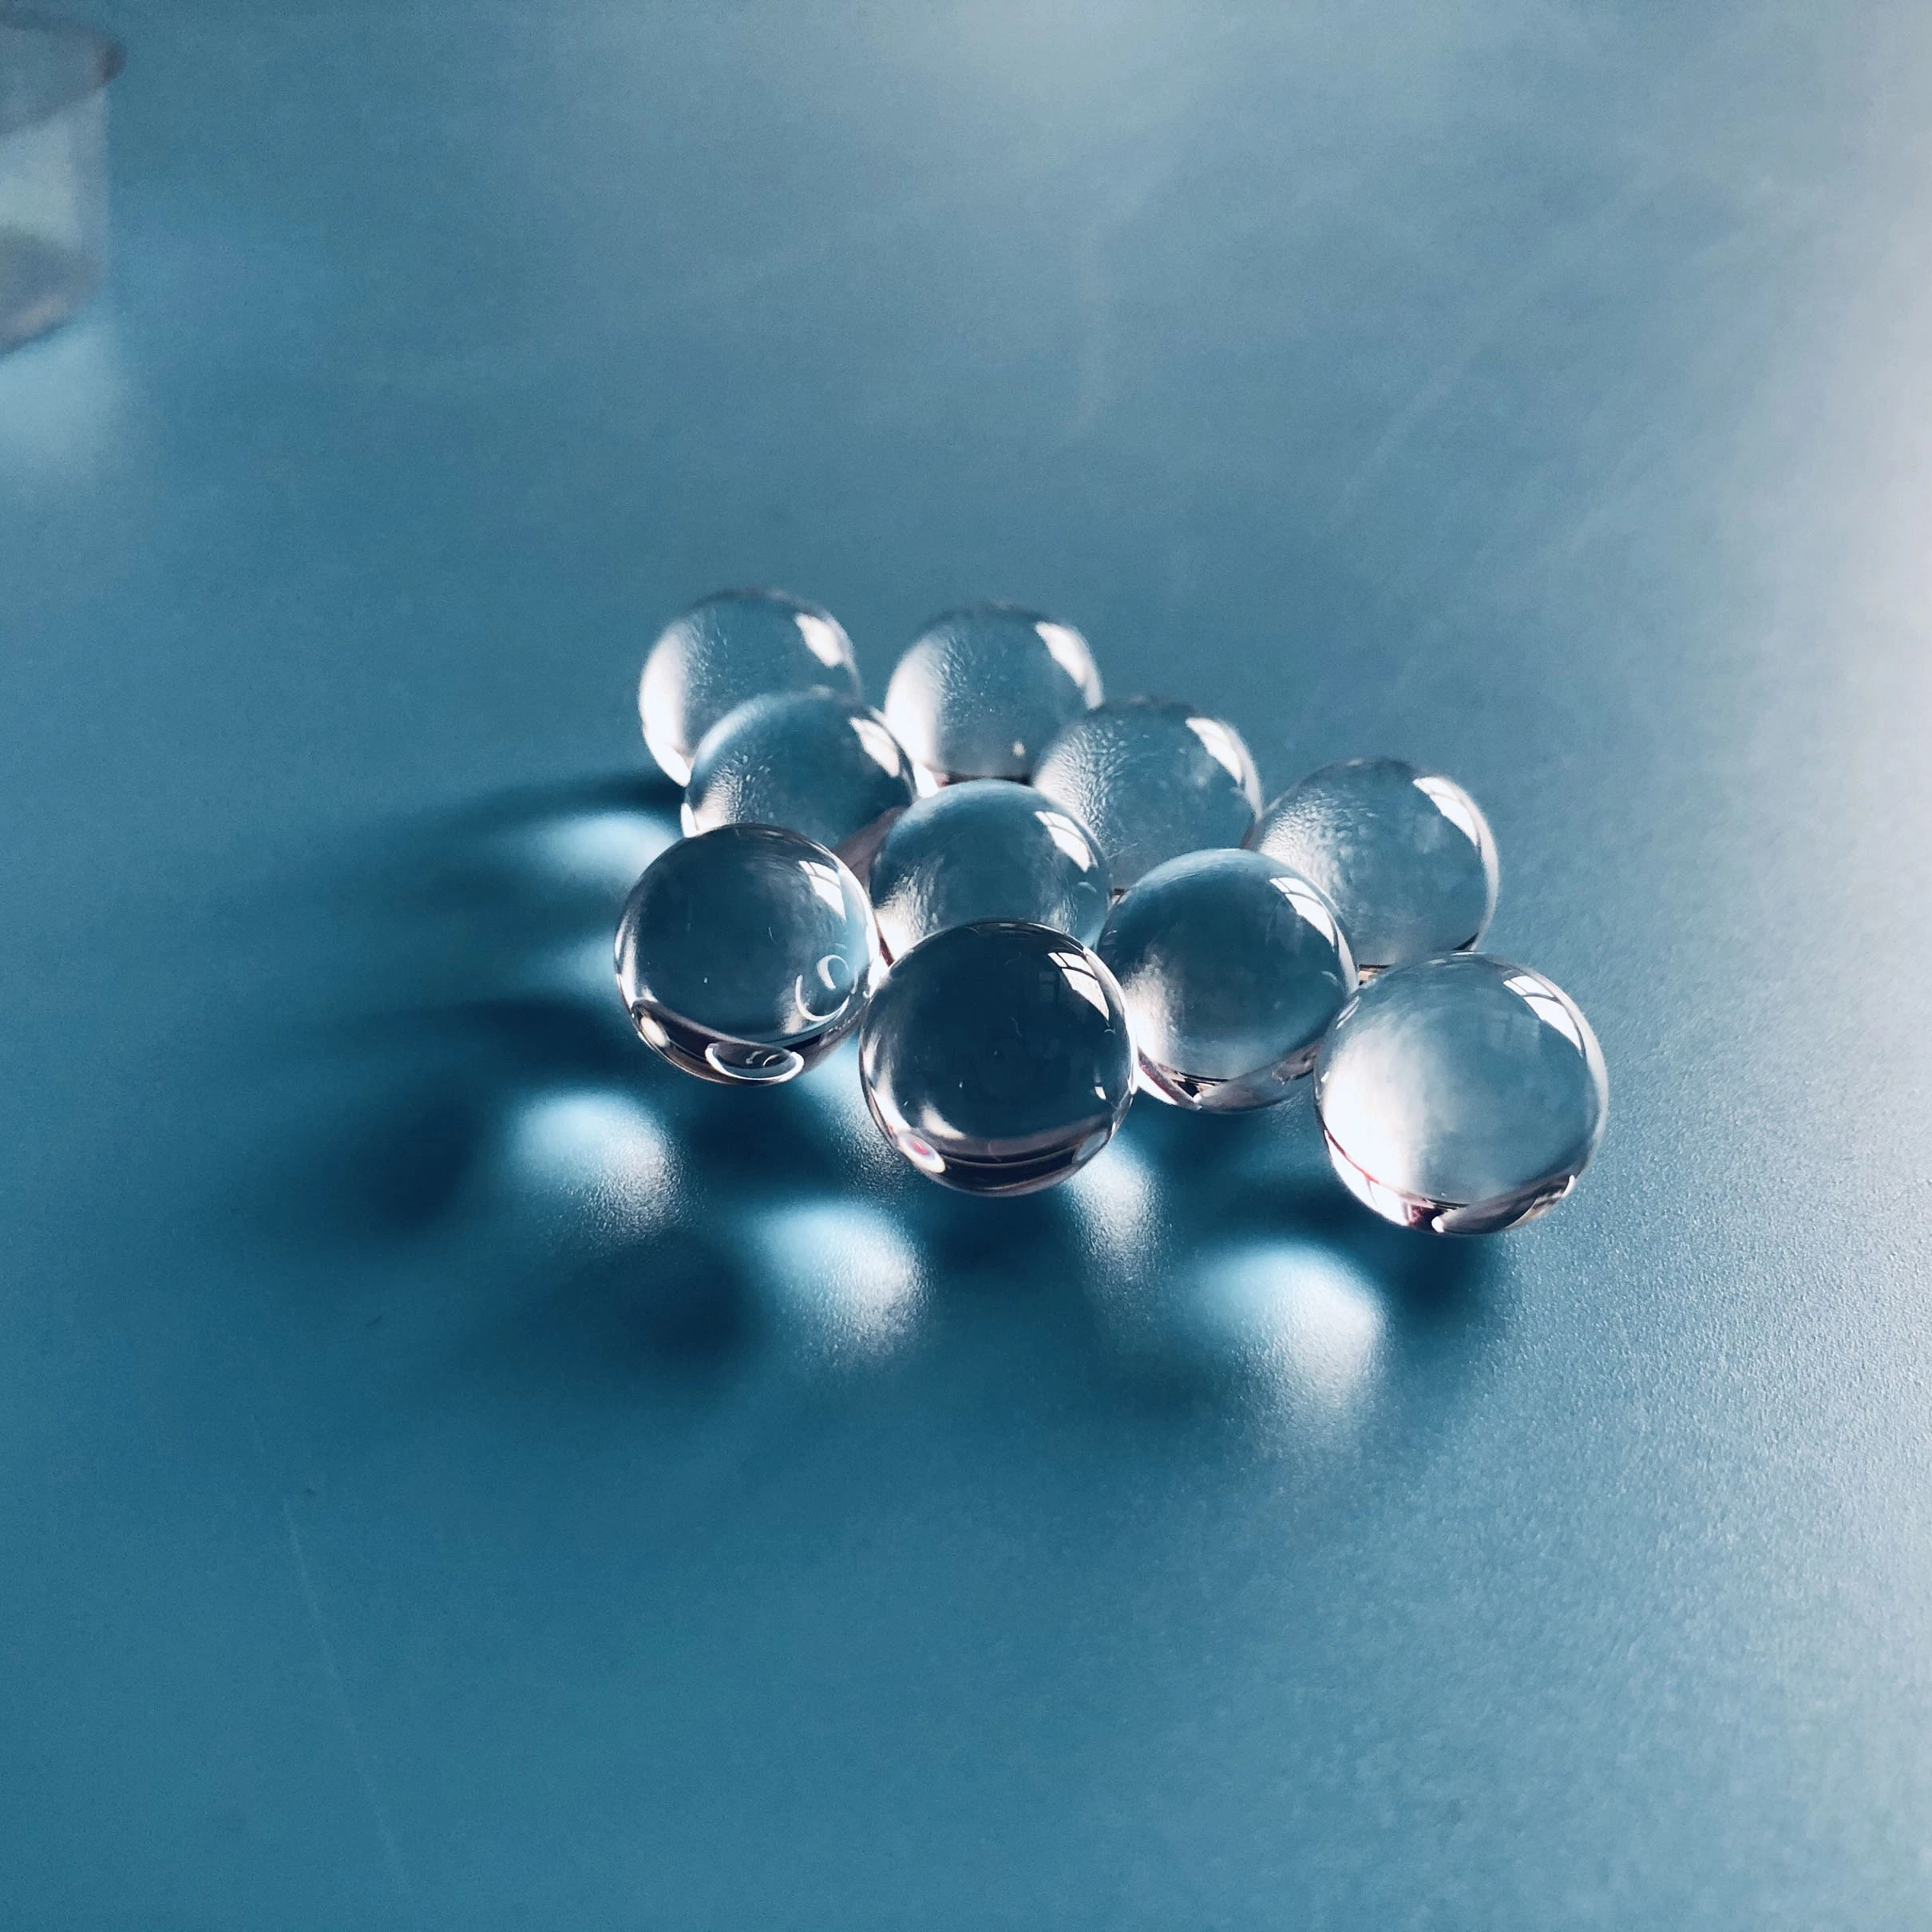 Optical Quartz Fused Silica Ball Lens for Endoscopy and Scanning